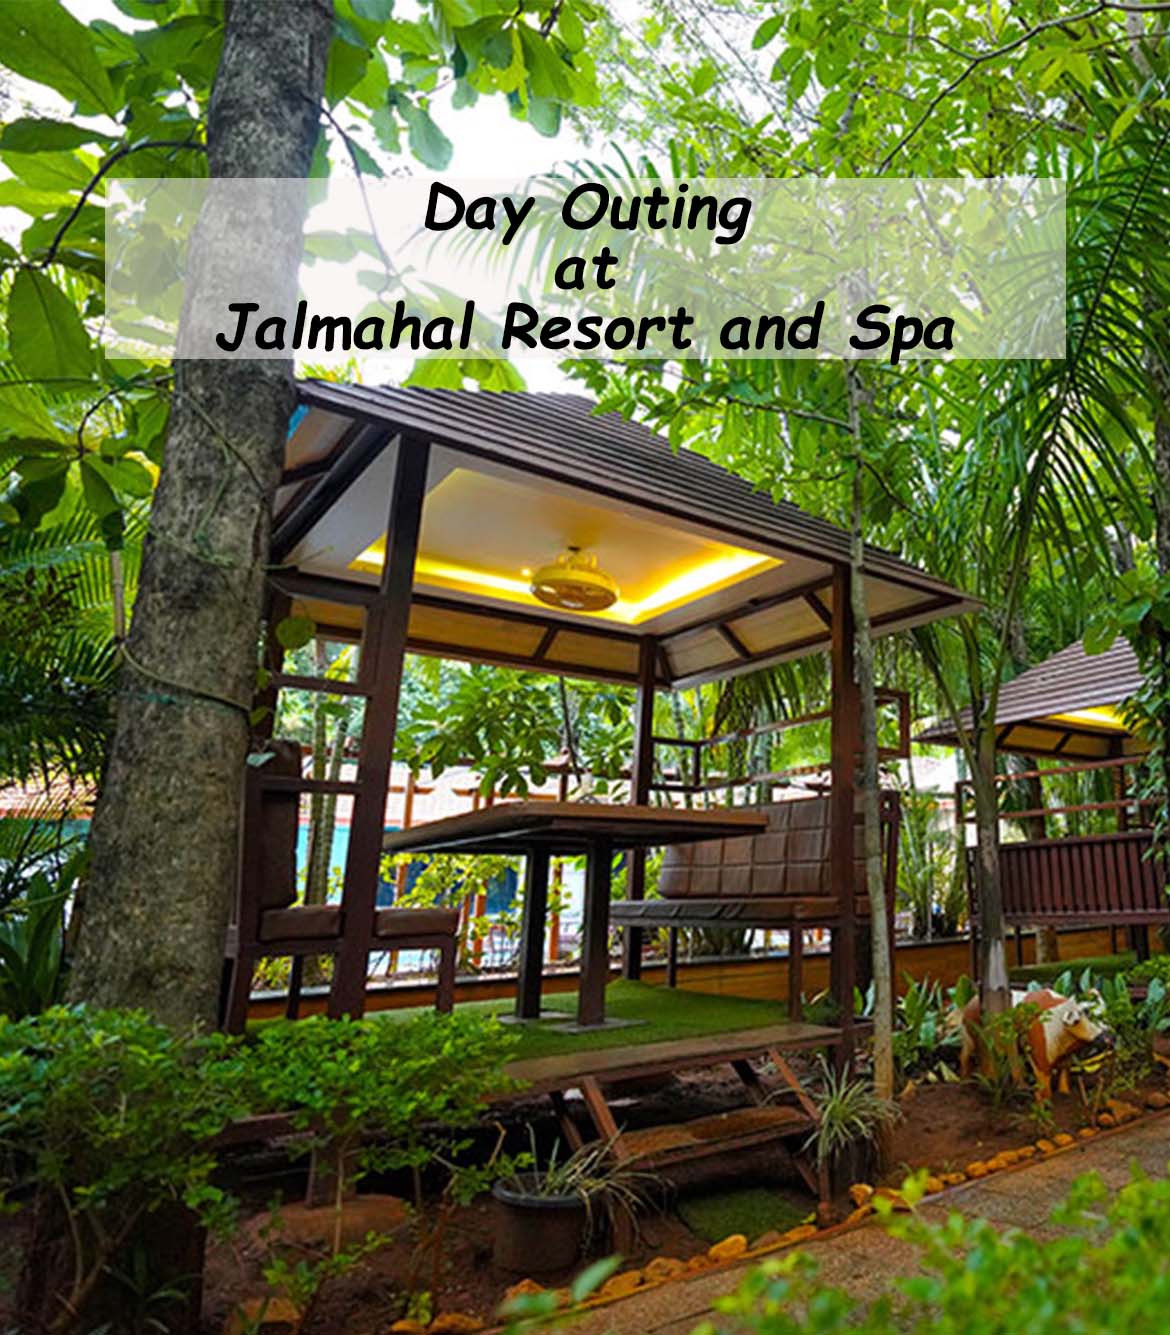 Day Outing at Jalmahal Resort and Spa